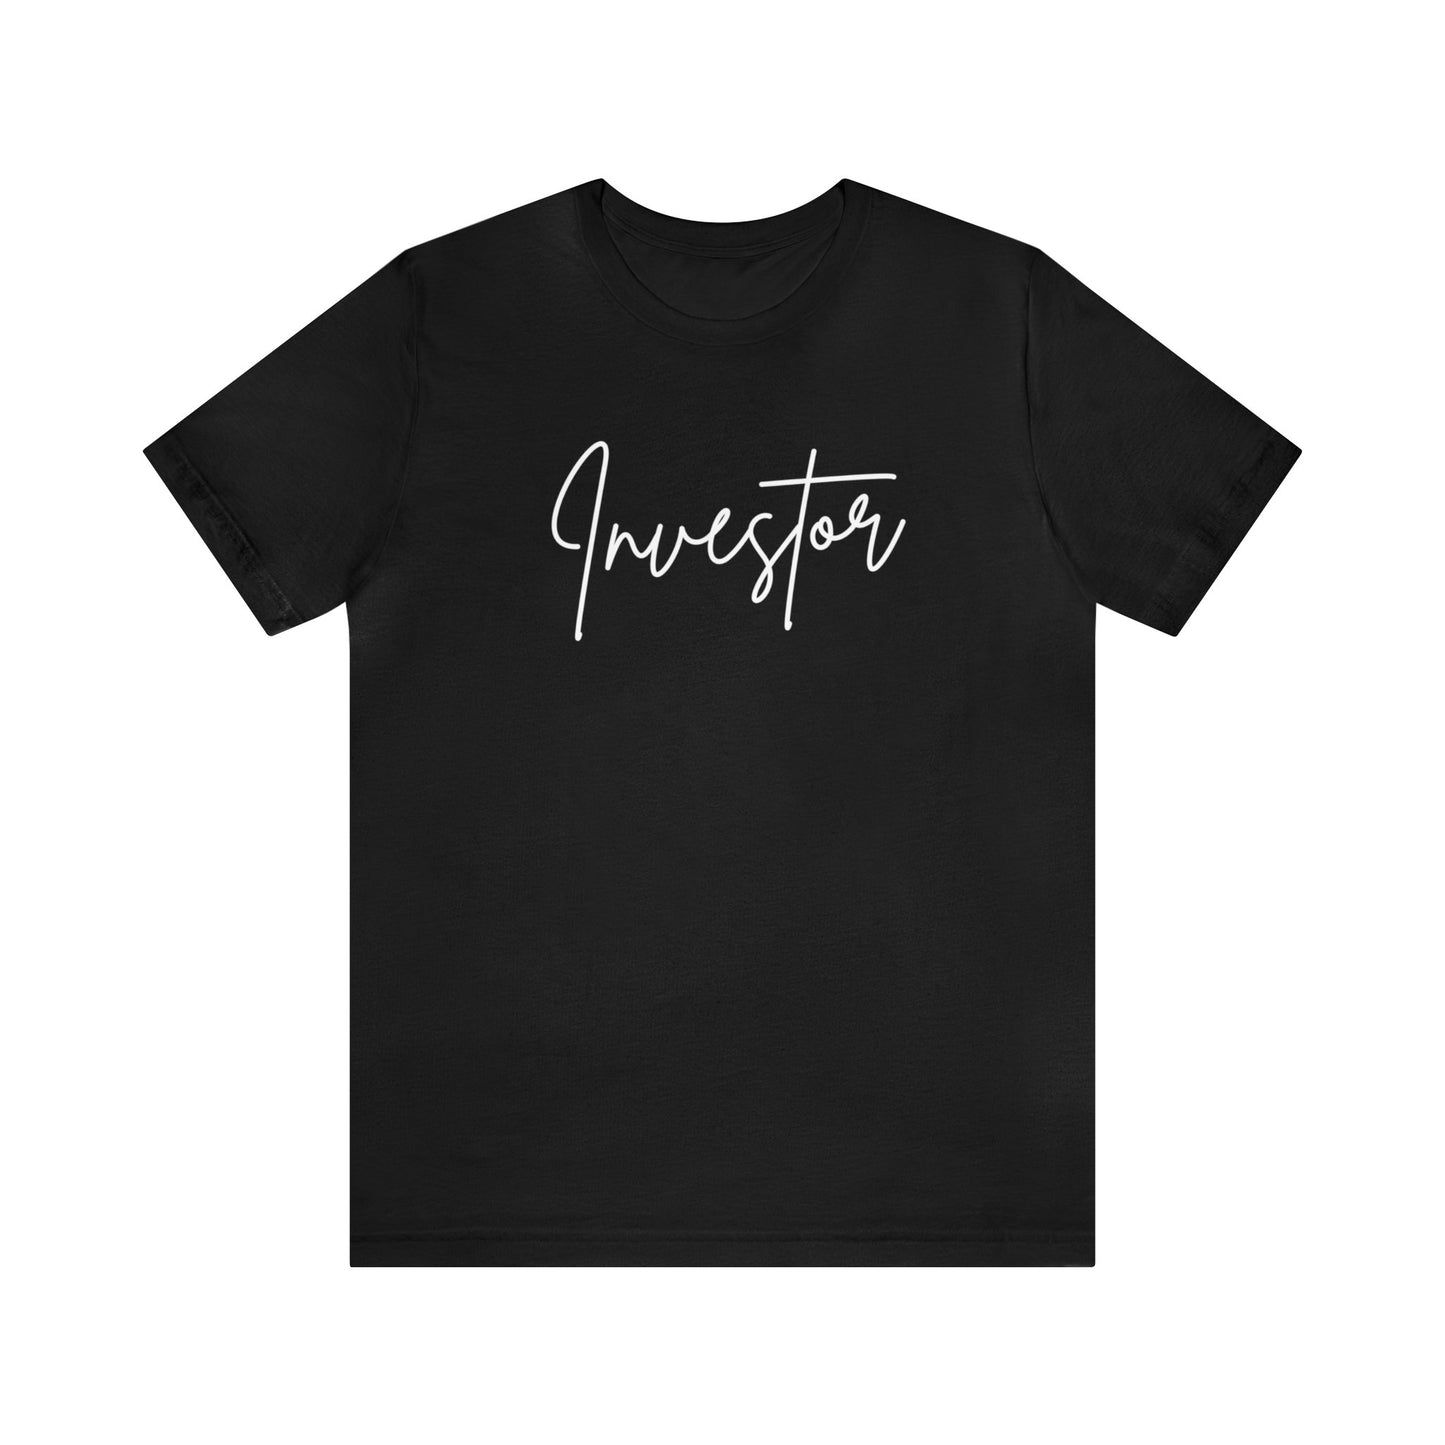 Investor T-shirt